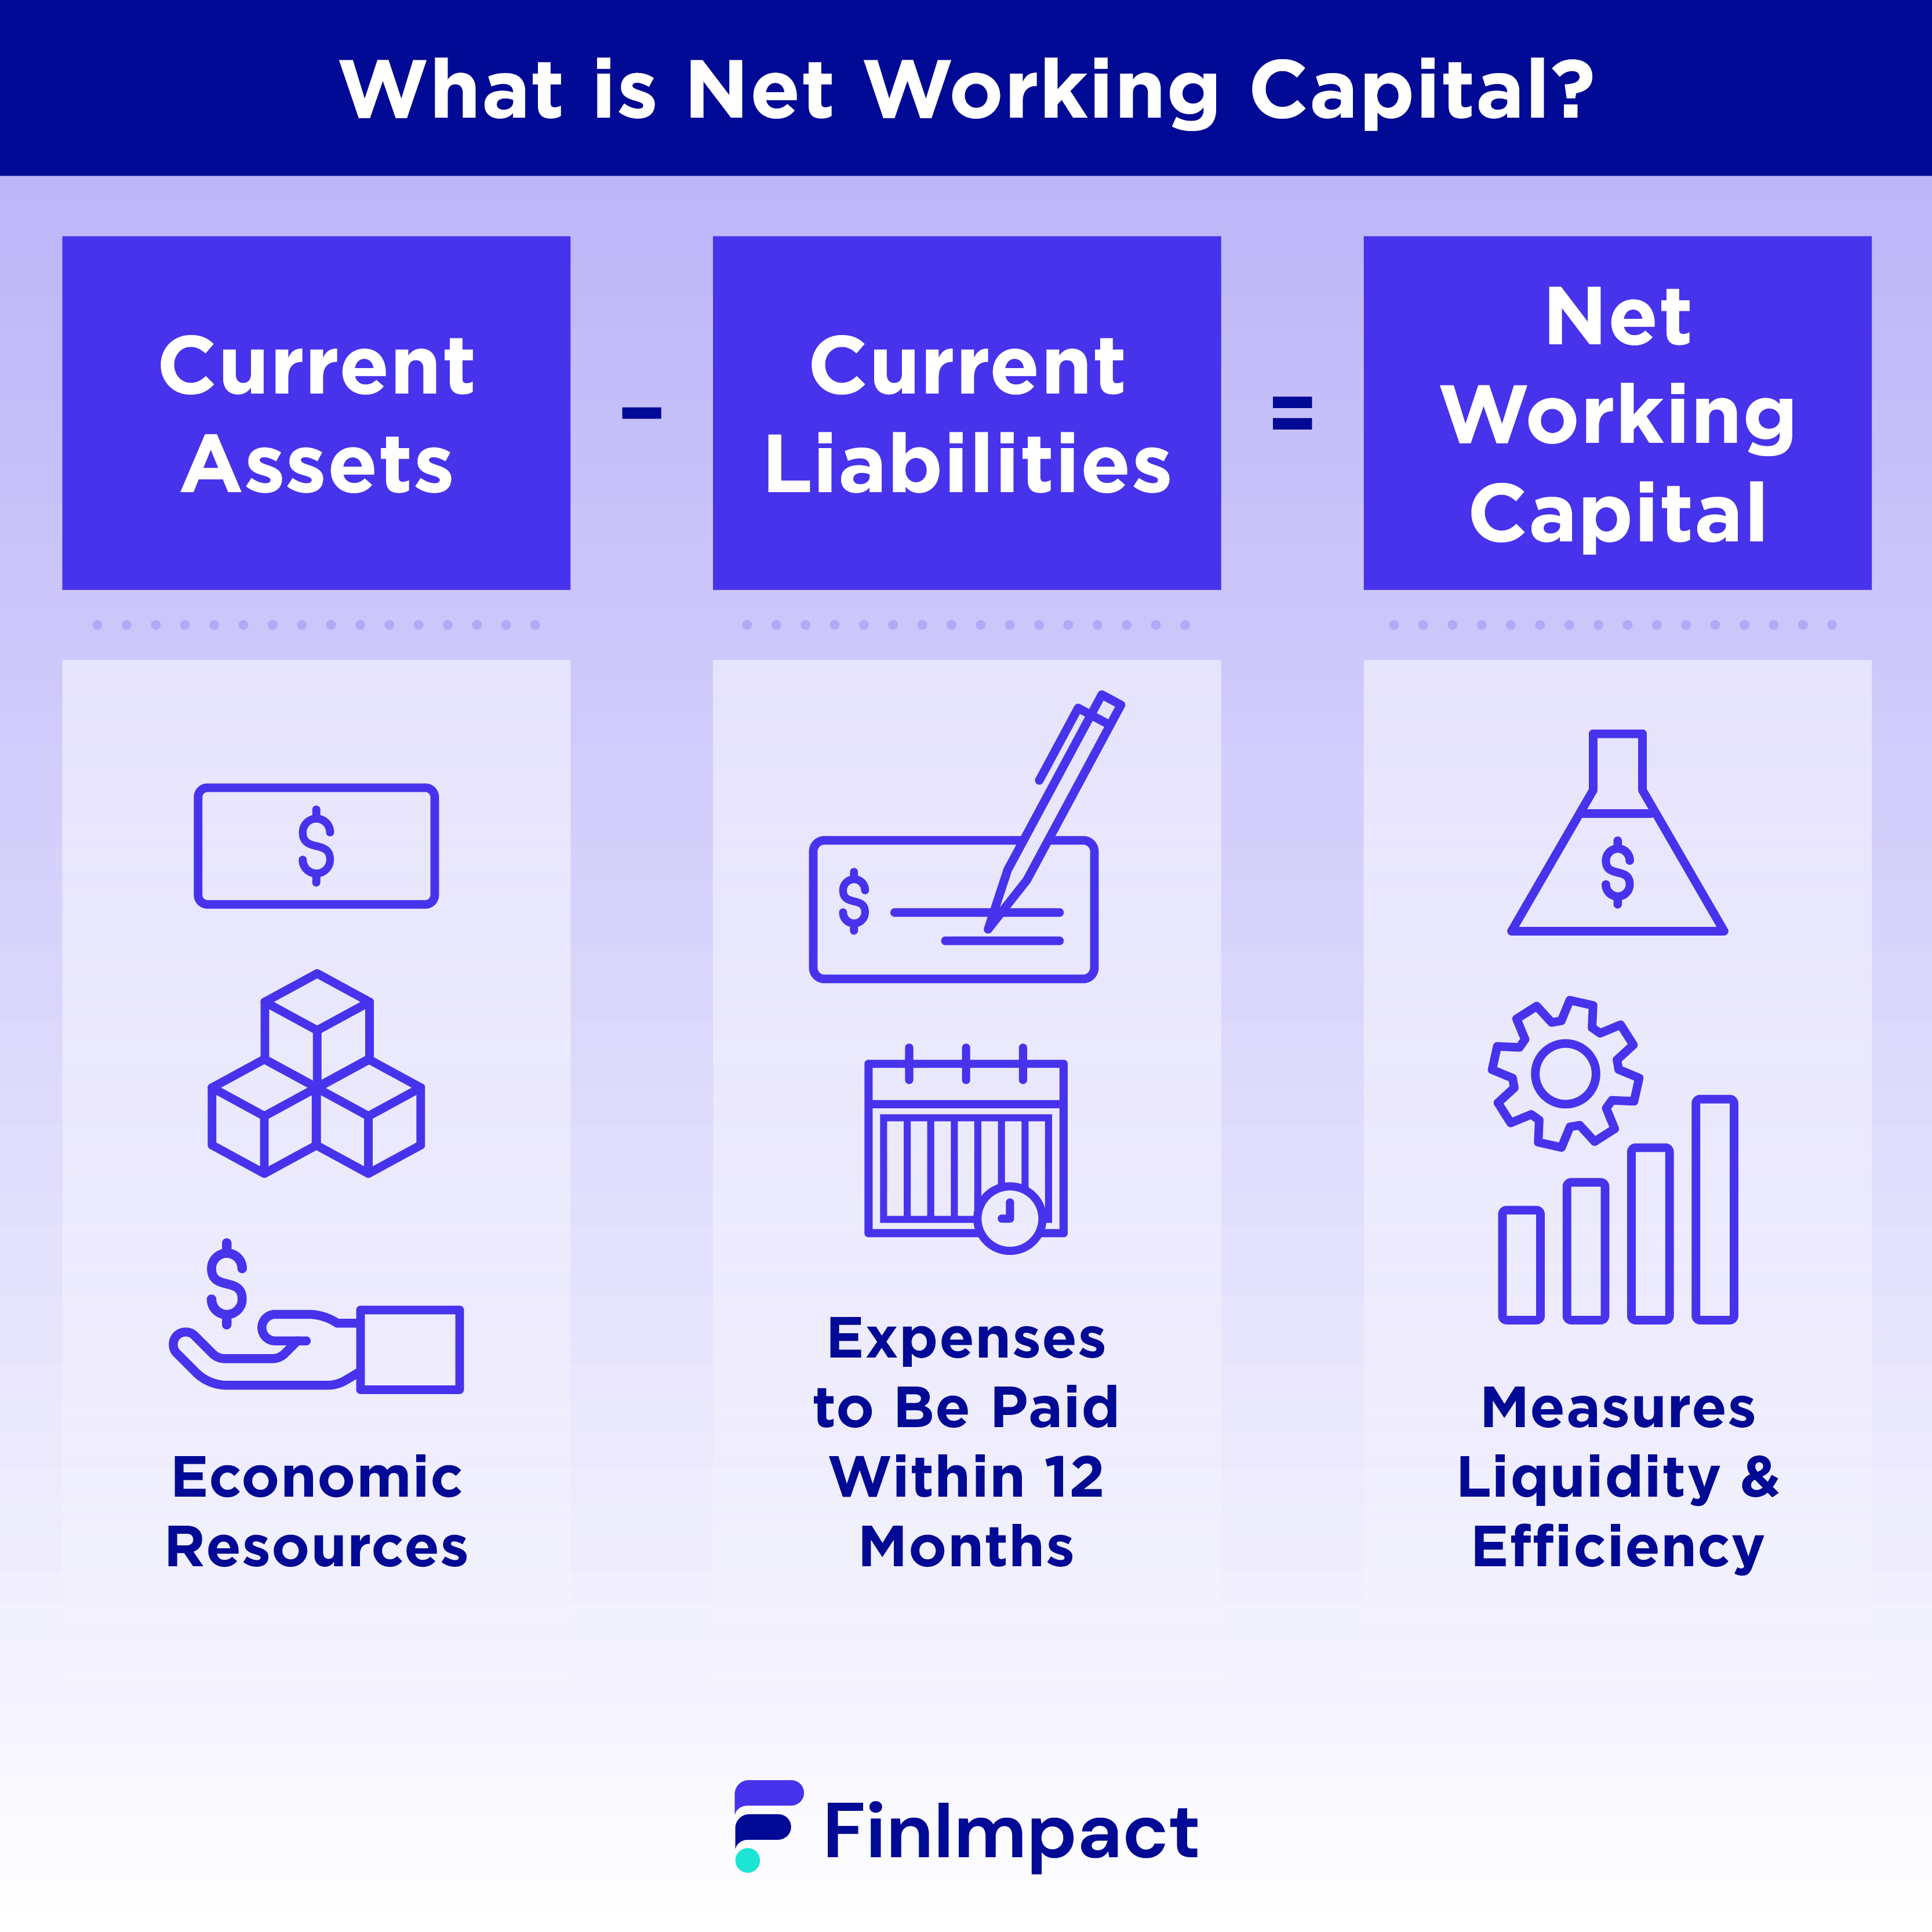 Net Working Capital.